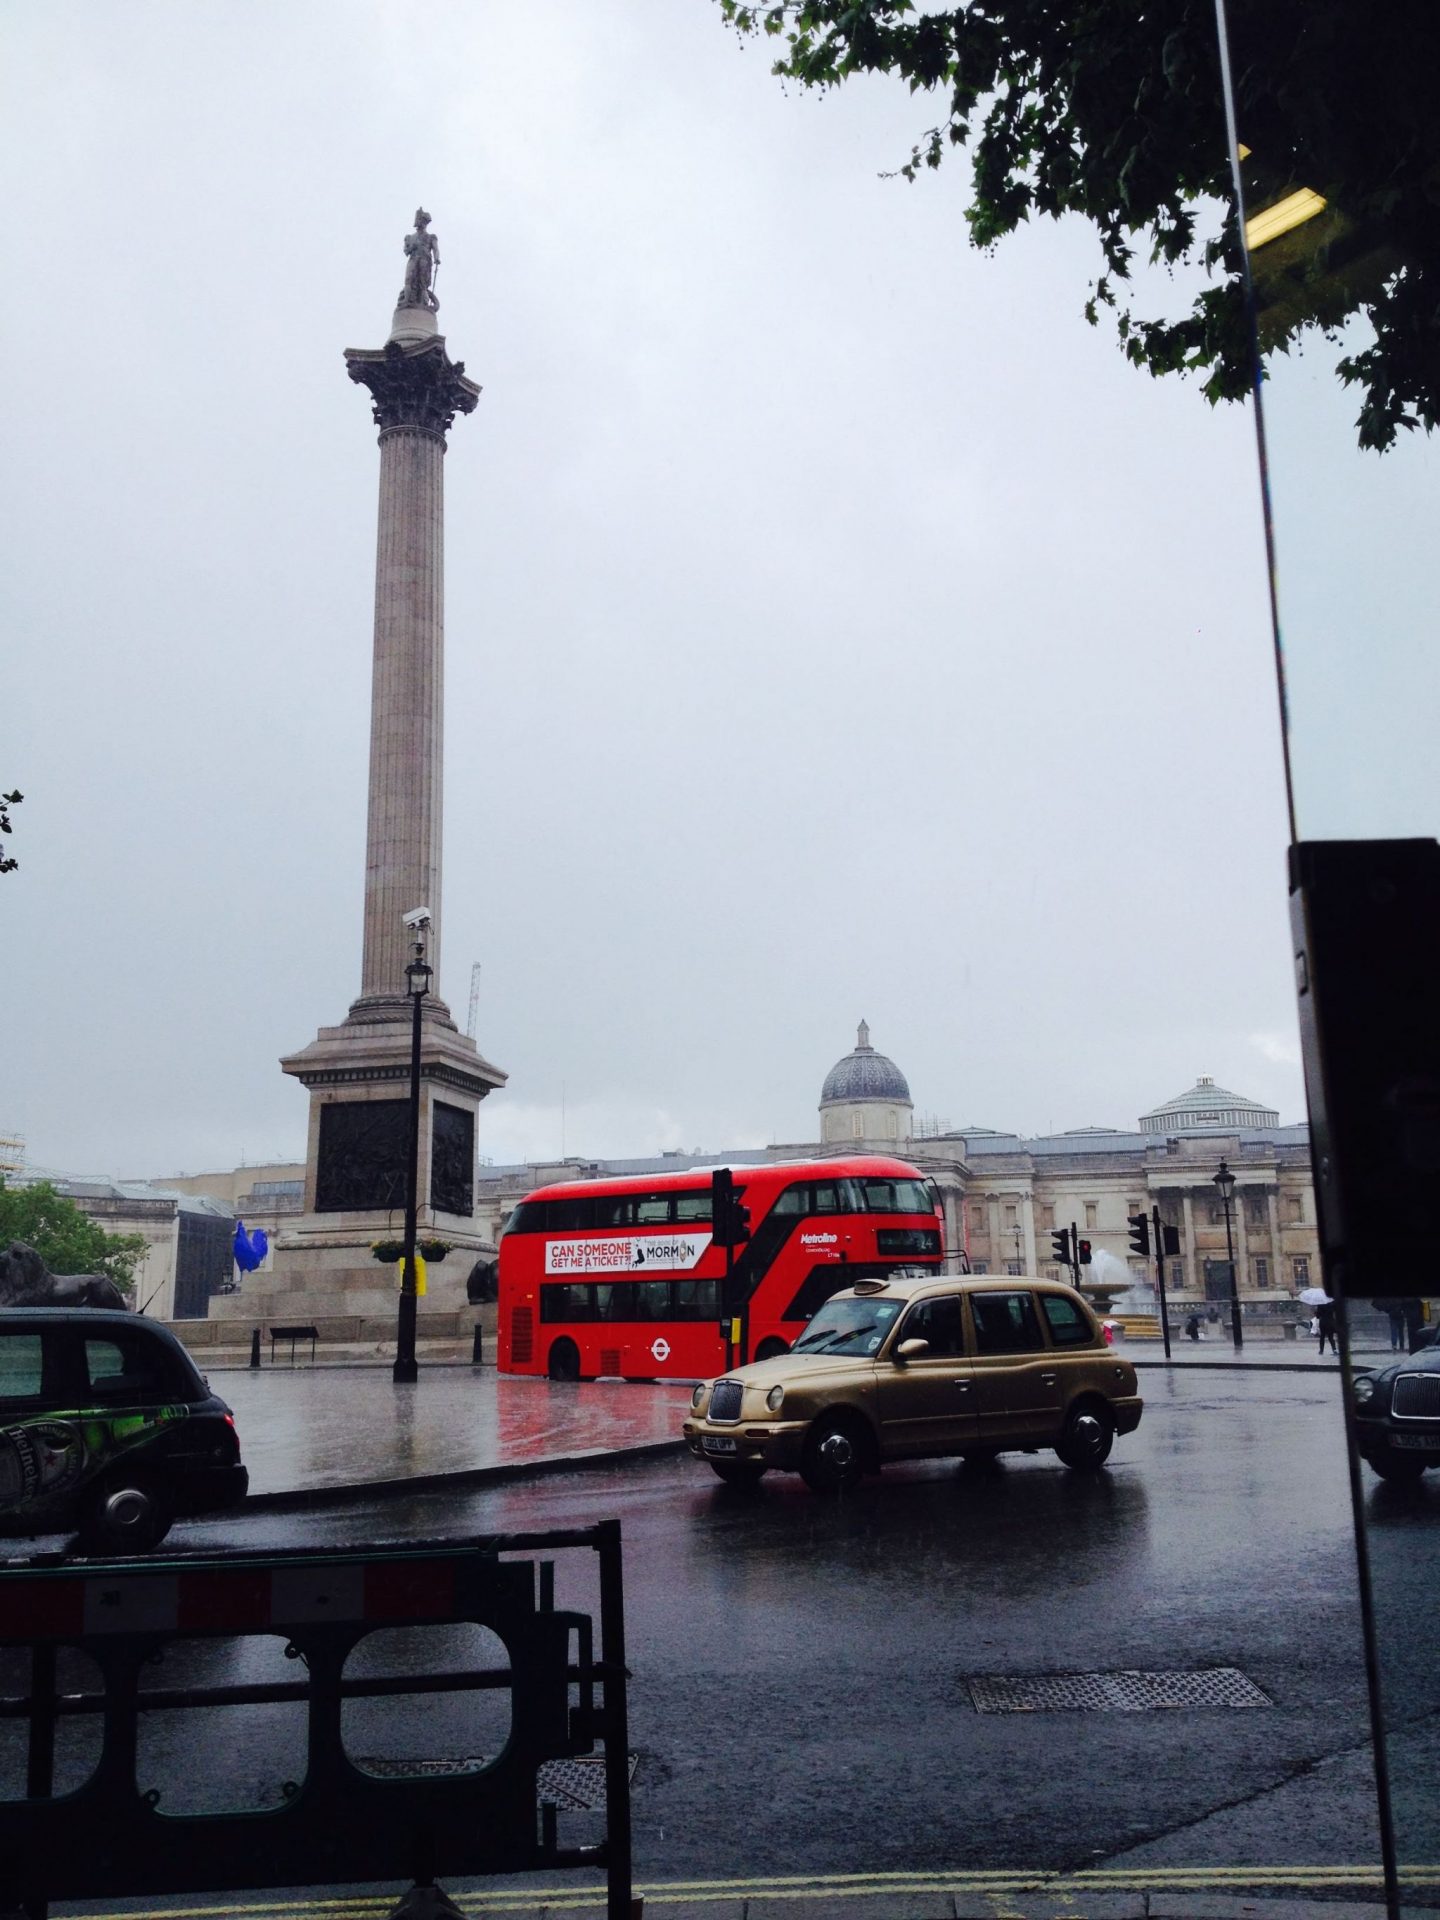 A drizzly Trafalgar Square, London